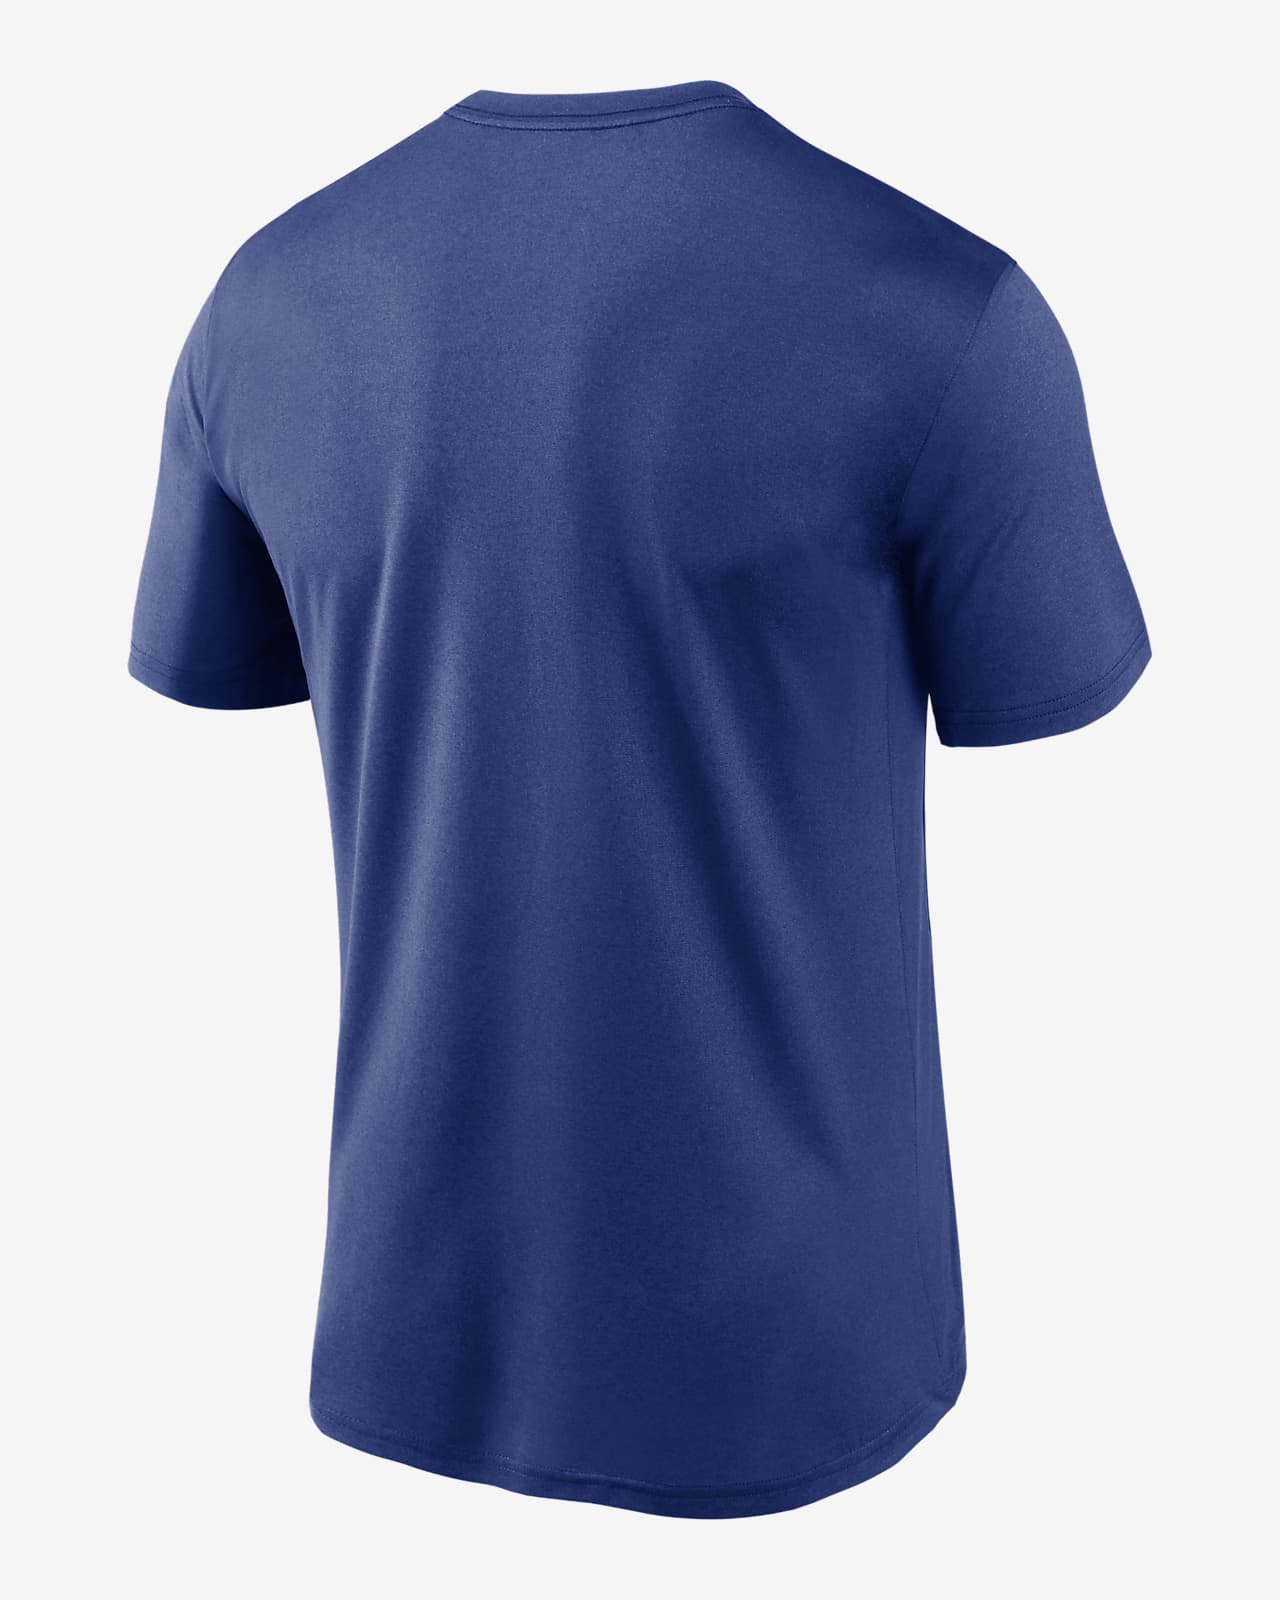 Nike Dri-FIT Flex (MLB Toronto Blue Jays) Men's Shorts